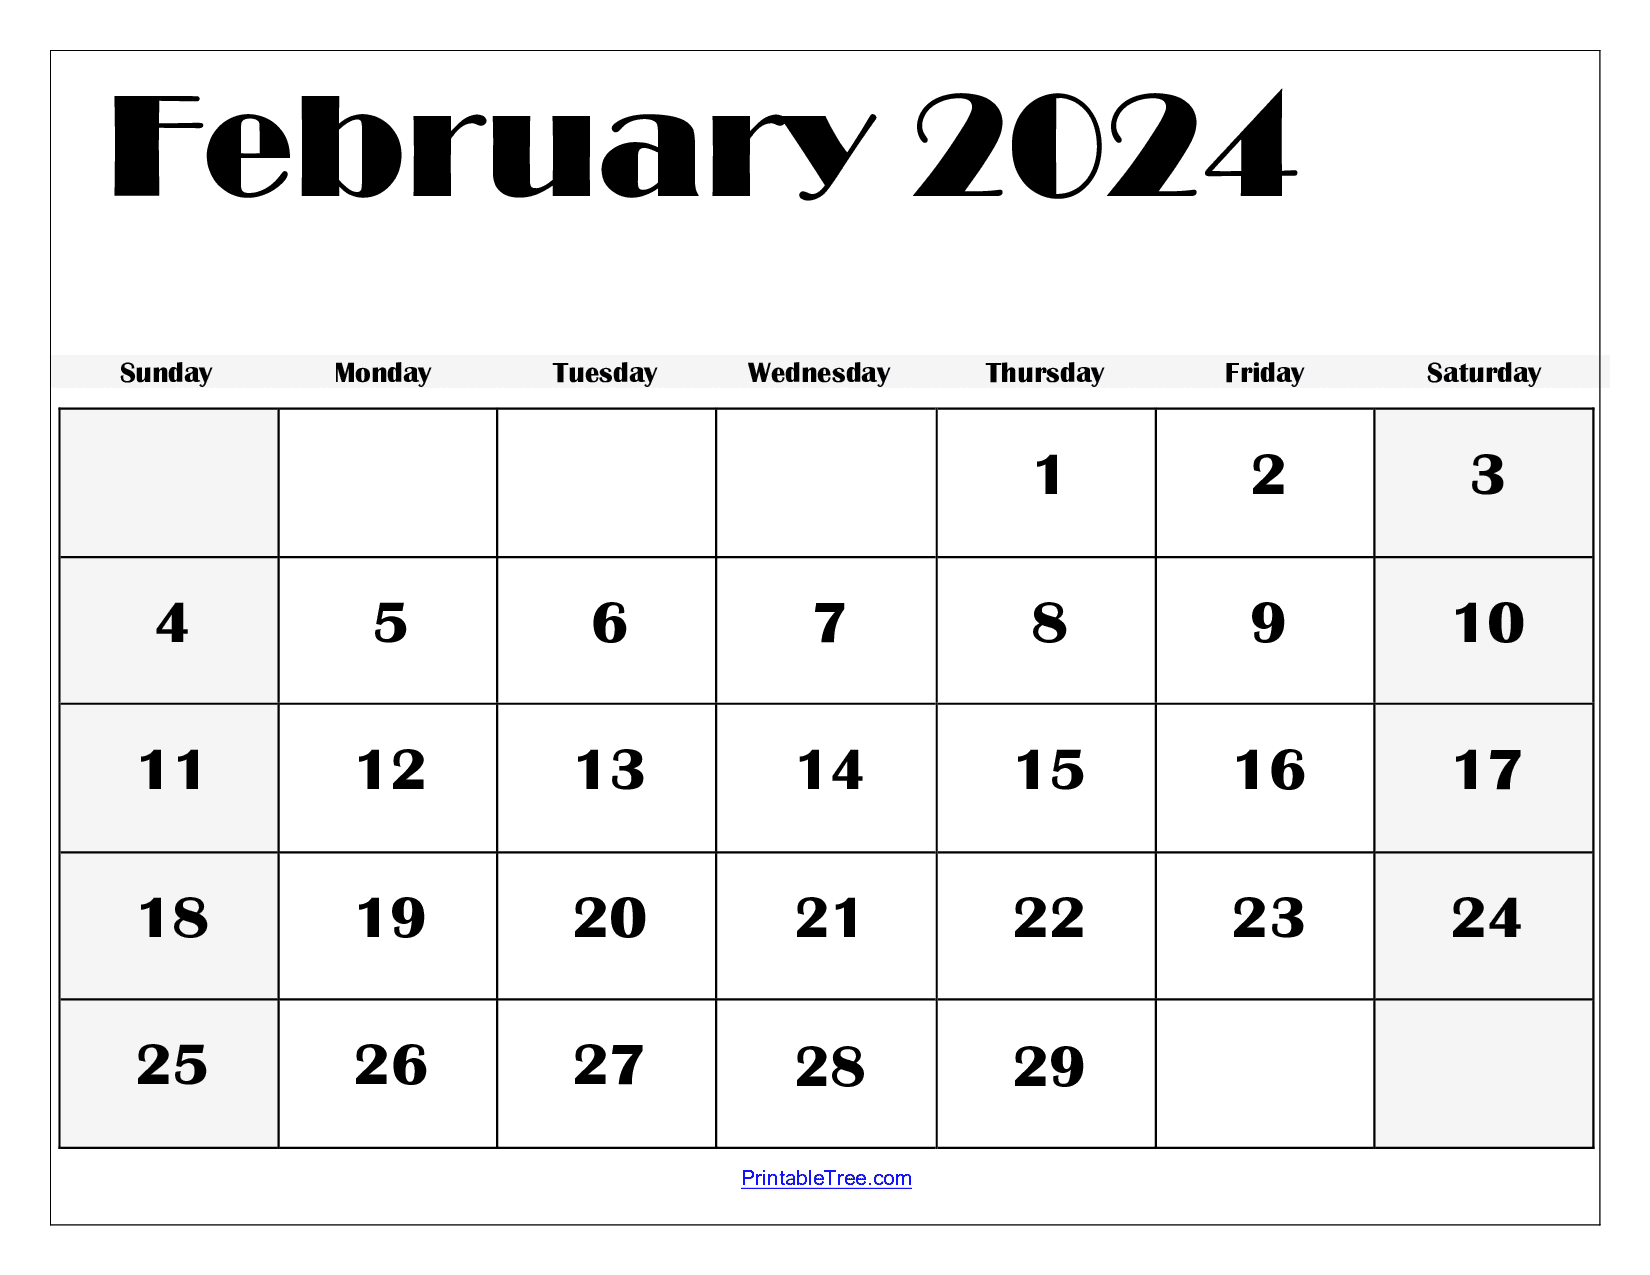 February 2024 Calendar Printable Pdf Template With Holidays for Free February 2024 Printable Calendar